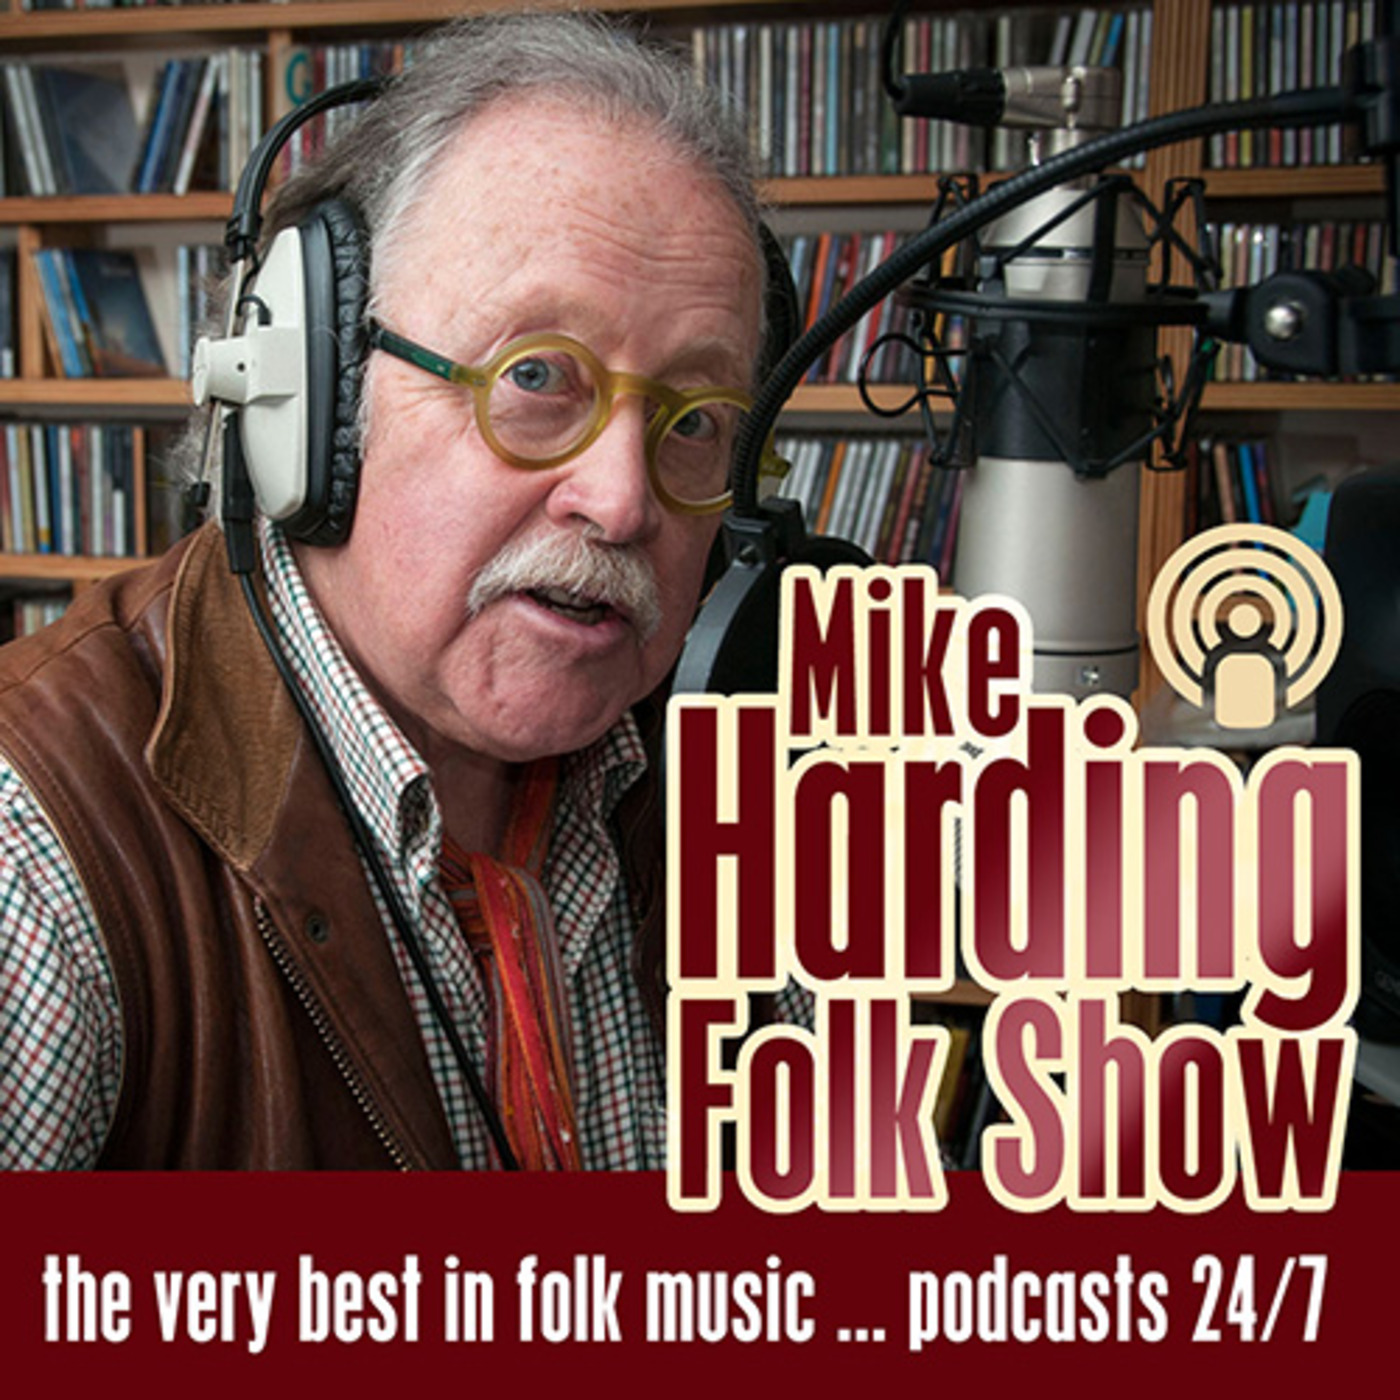 Mike Harding Folk Show 292